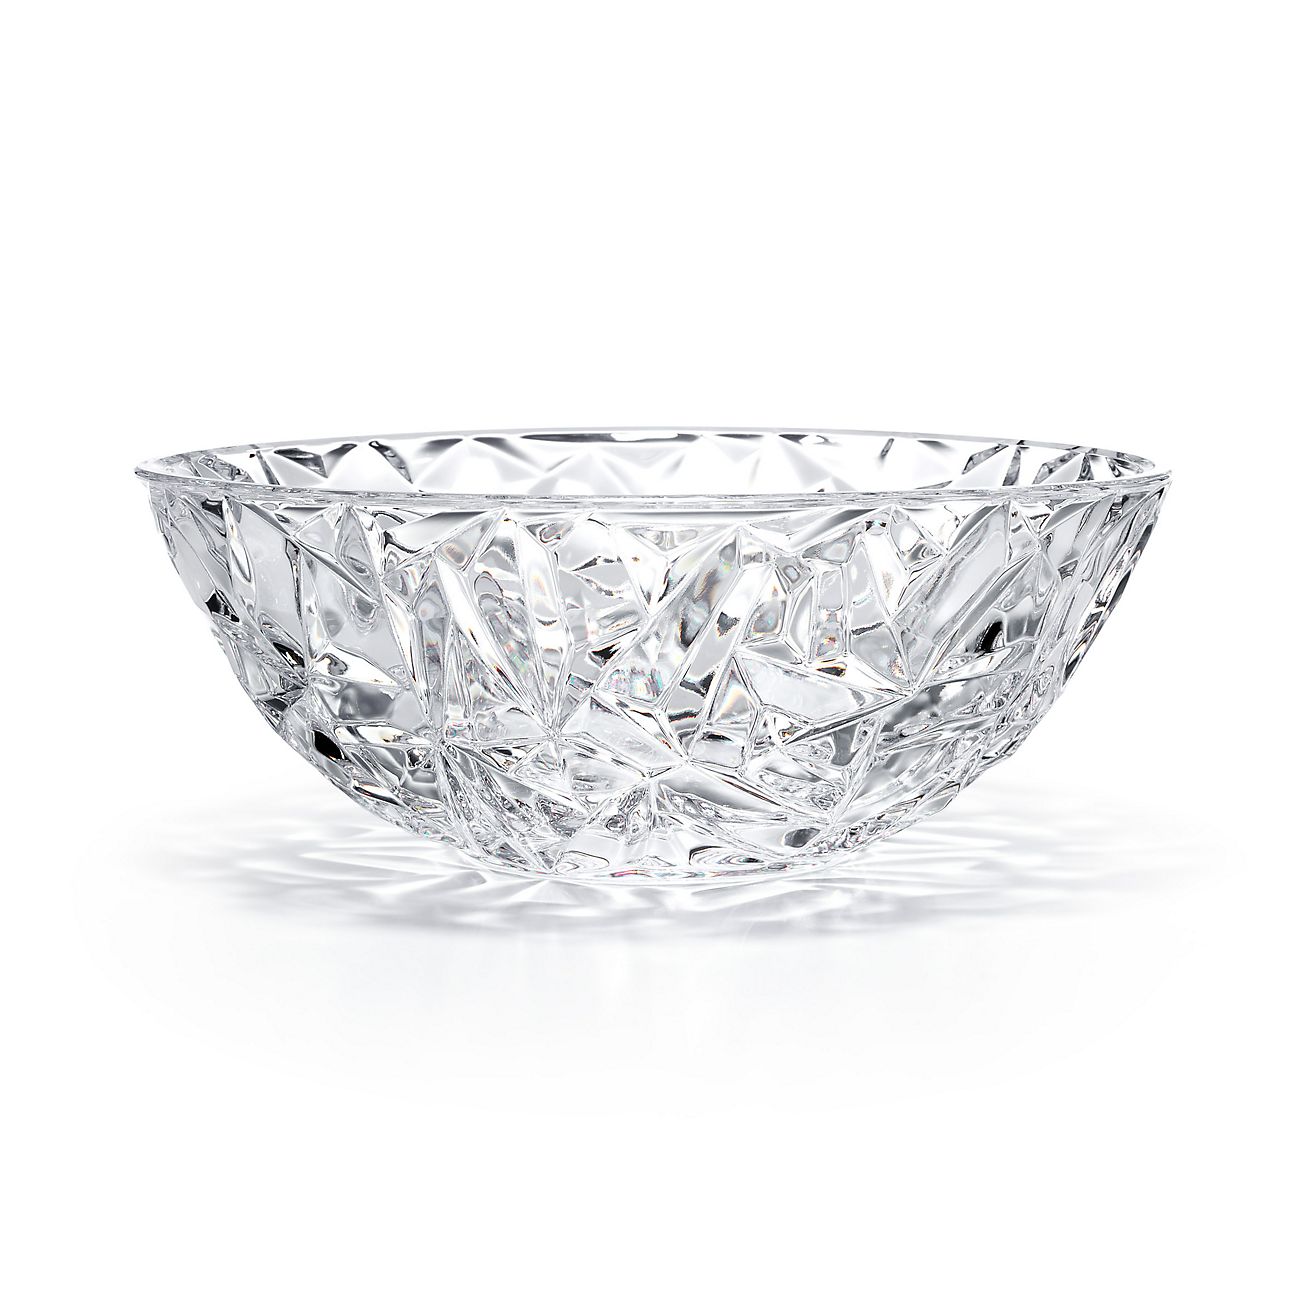 Rock-cut bowl in crystal, 9\